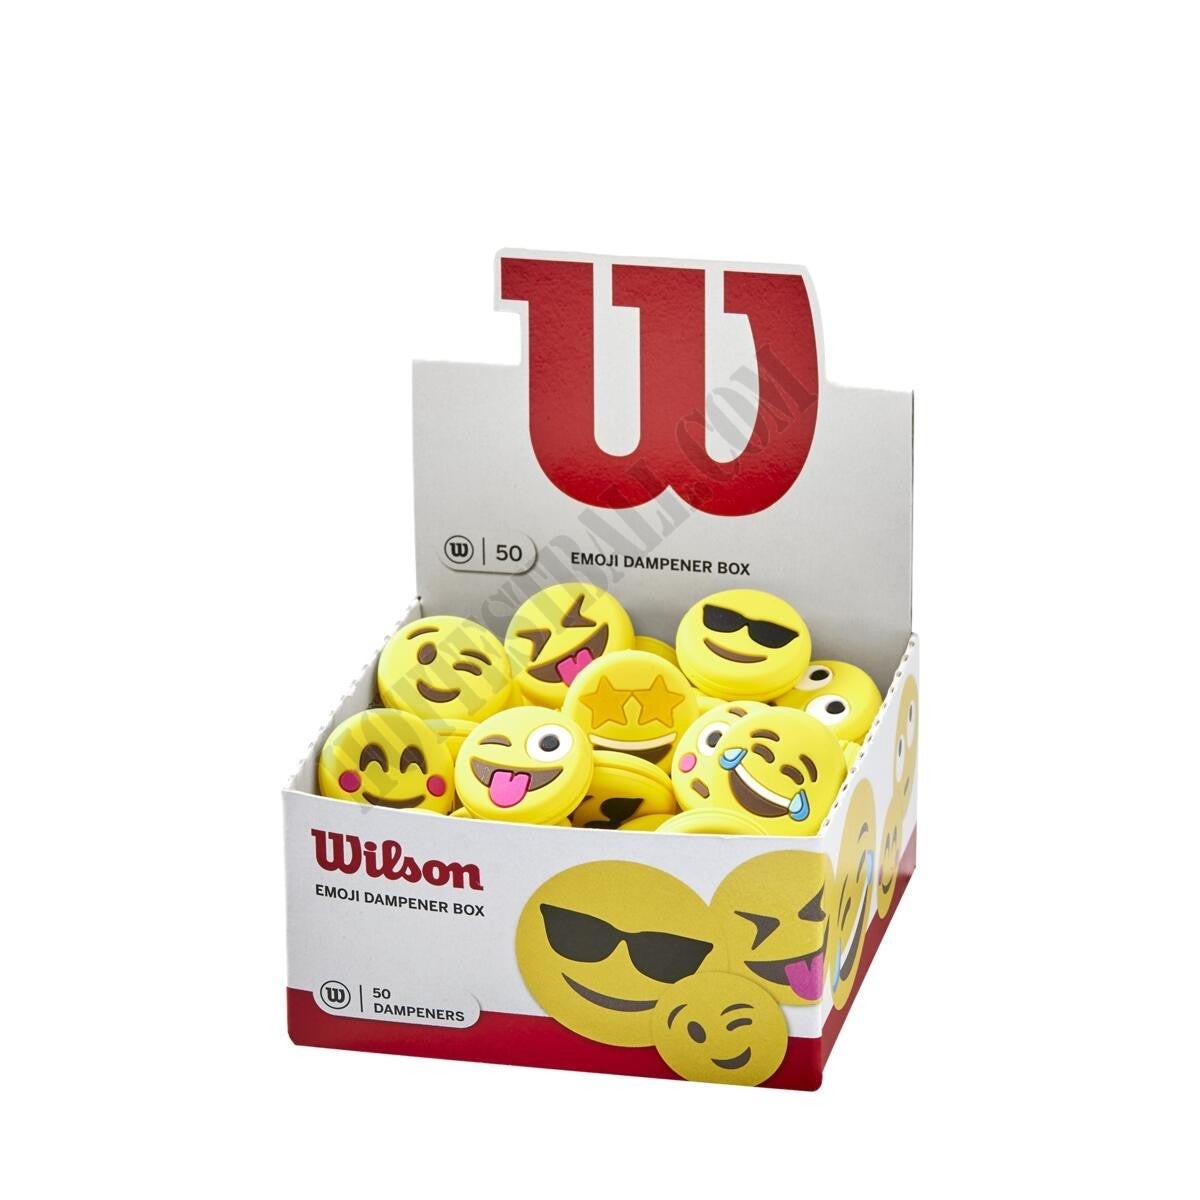 Emoji Dampener Box 50 Pack - Wilson Discount Store - Emoji Dampener Box 50 Pack - Wilson Discount Store